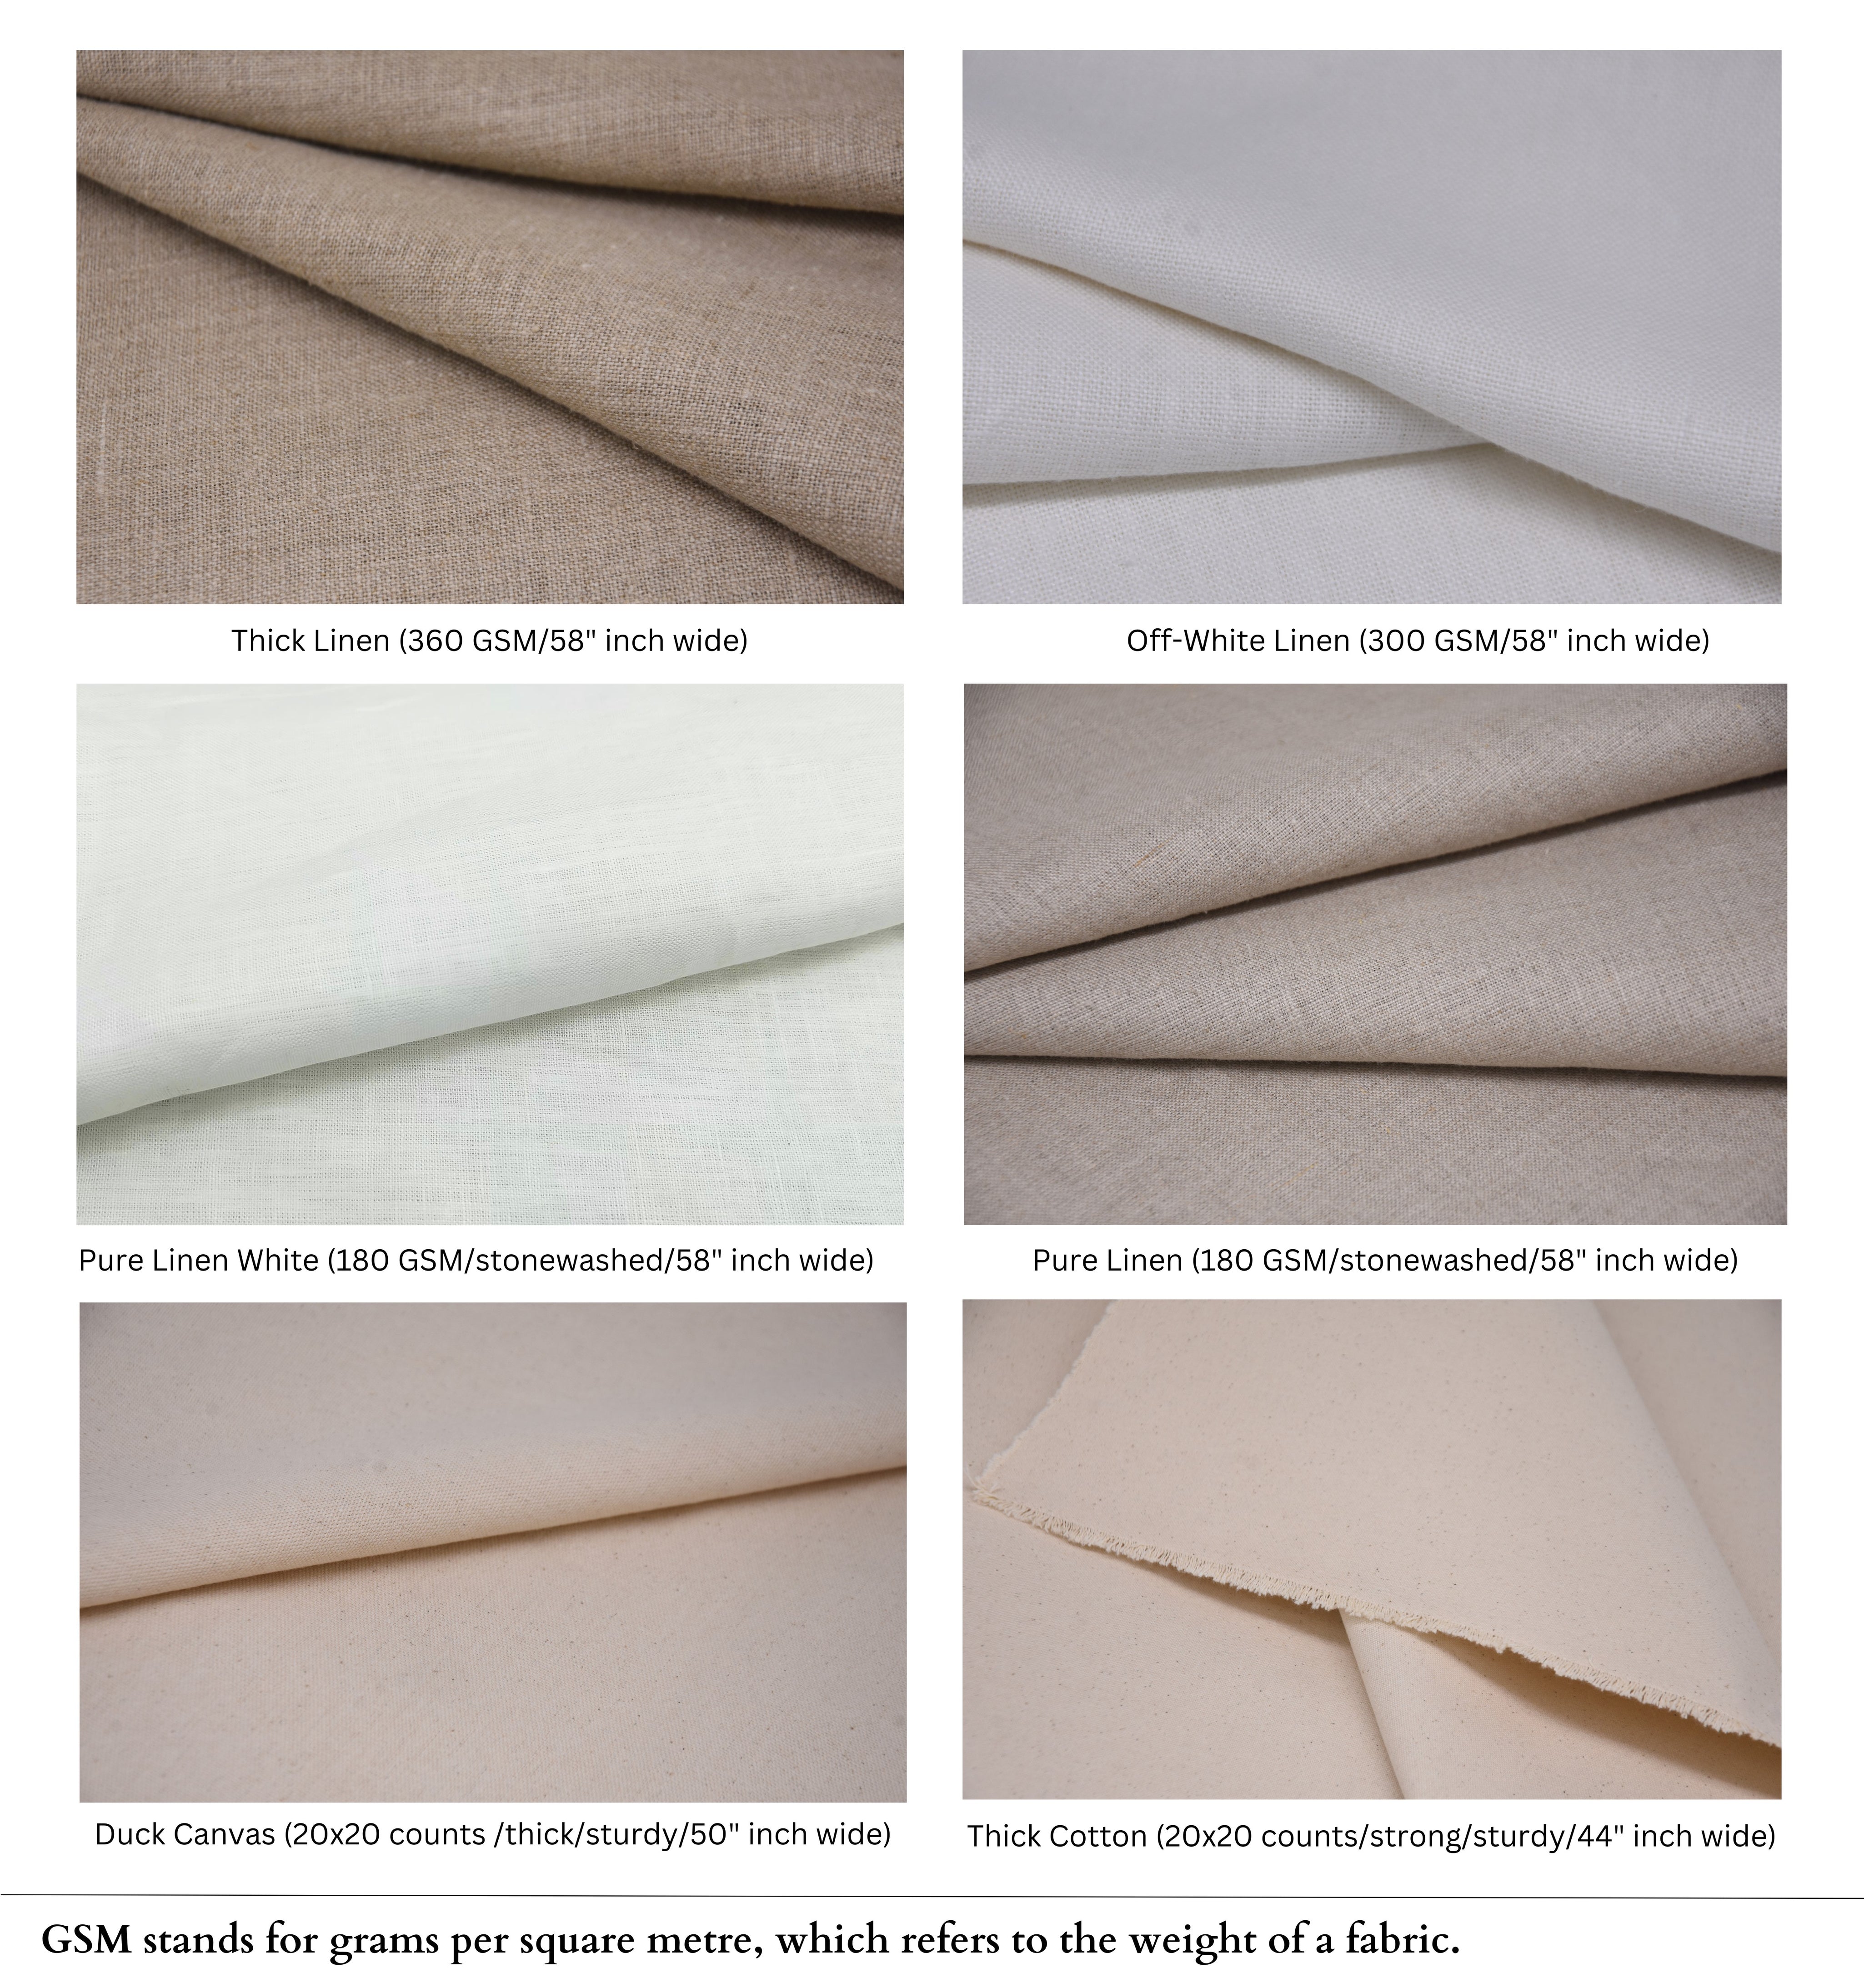 Block Print Linen Fabric, Summer Flower Wood Block Print, Pure Linen Fabric, By The Yard, Home Decor Fabric,Cushion Cases, Upholstery